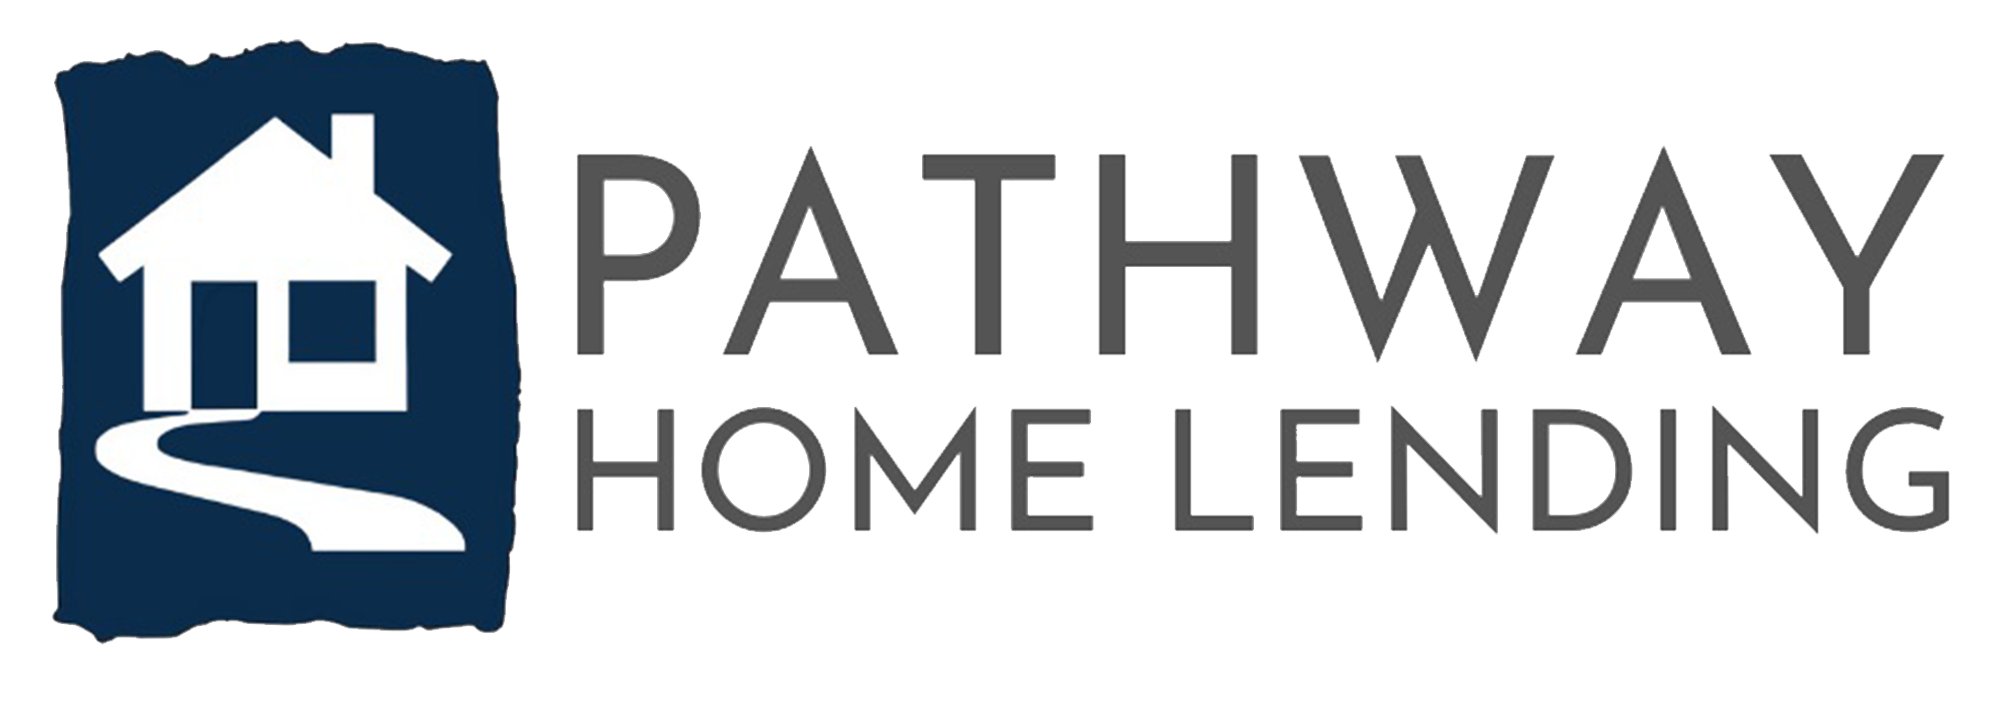 Pathway Home Lending Inc